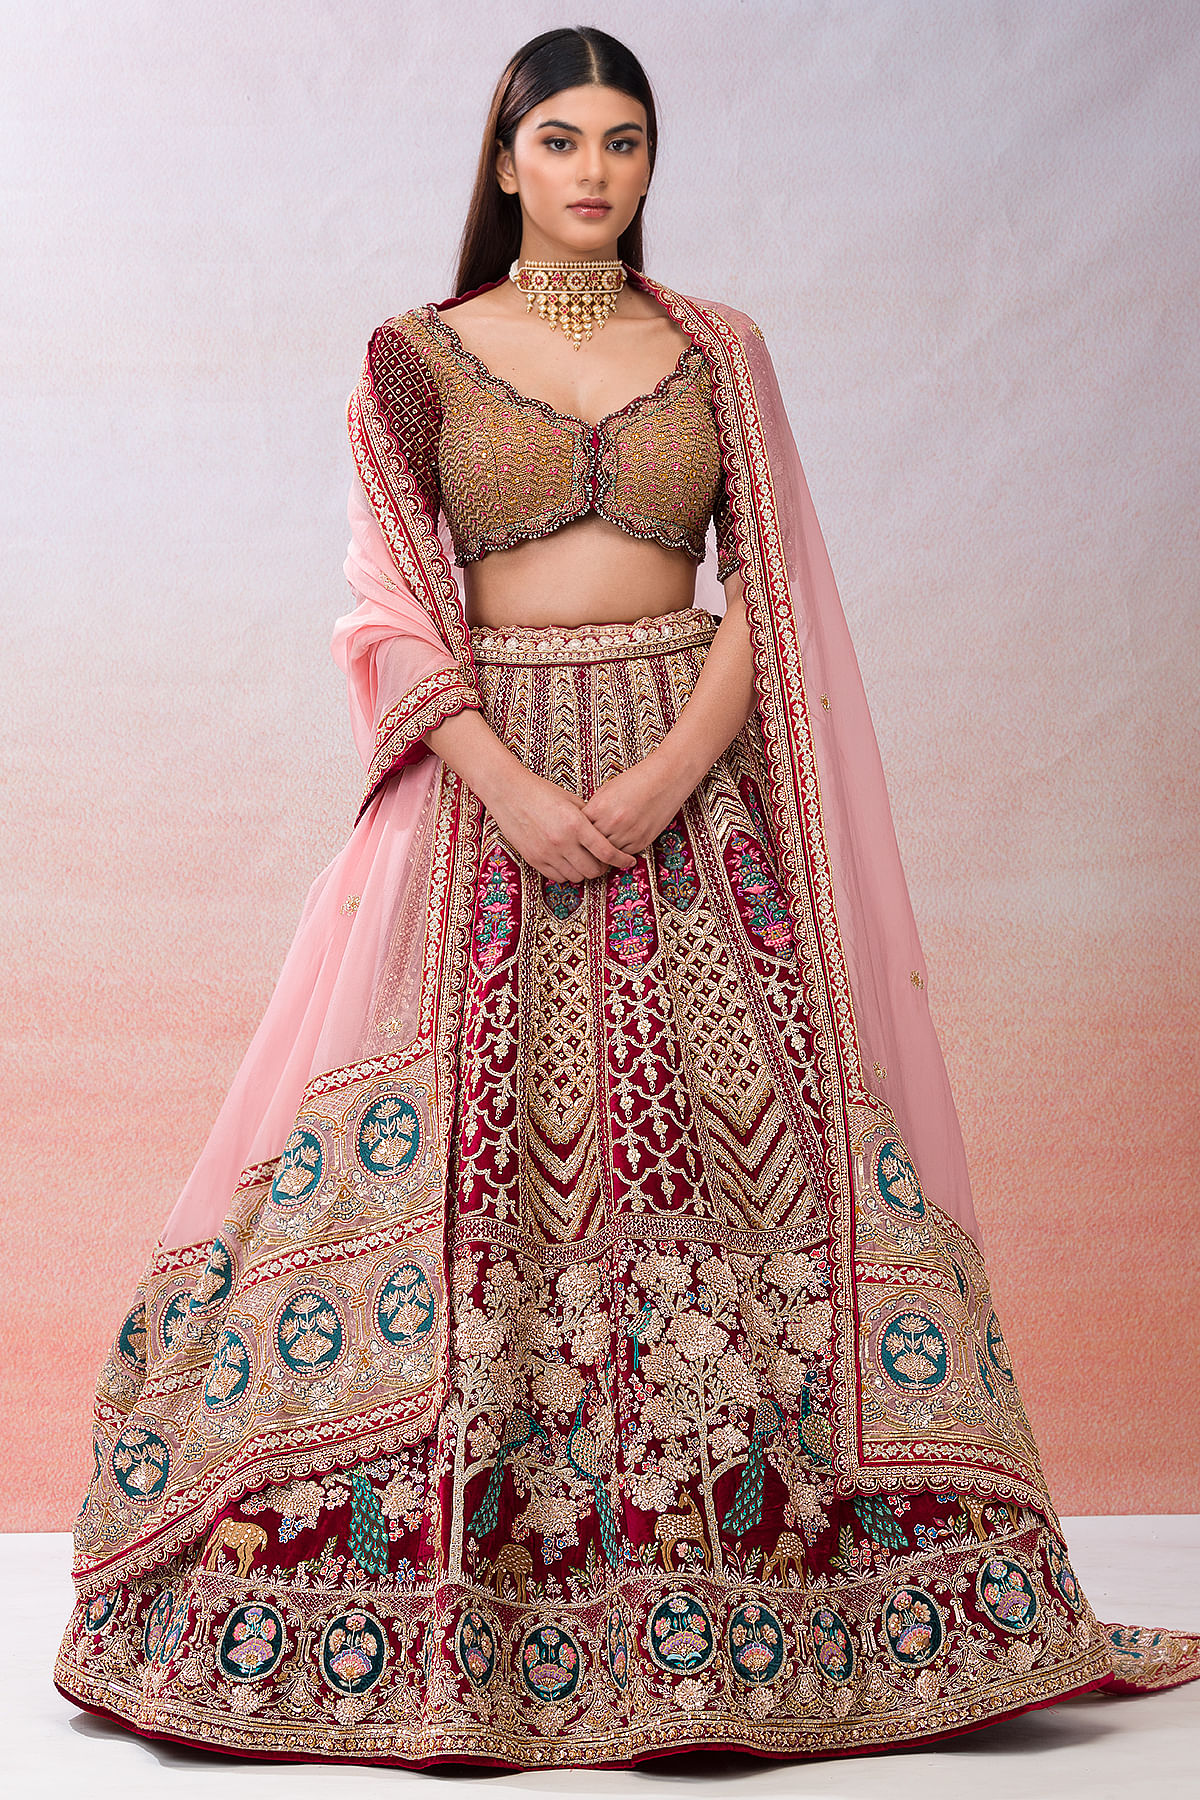 Bridal Lehenga in Red and Golden Colour | Zardozi Fashion Farrukhabad